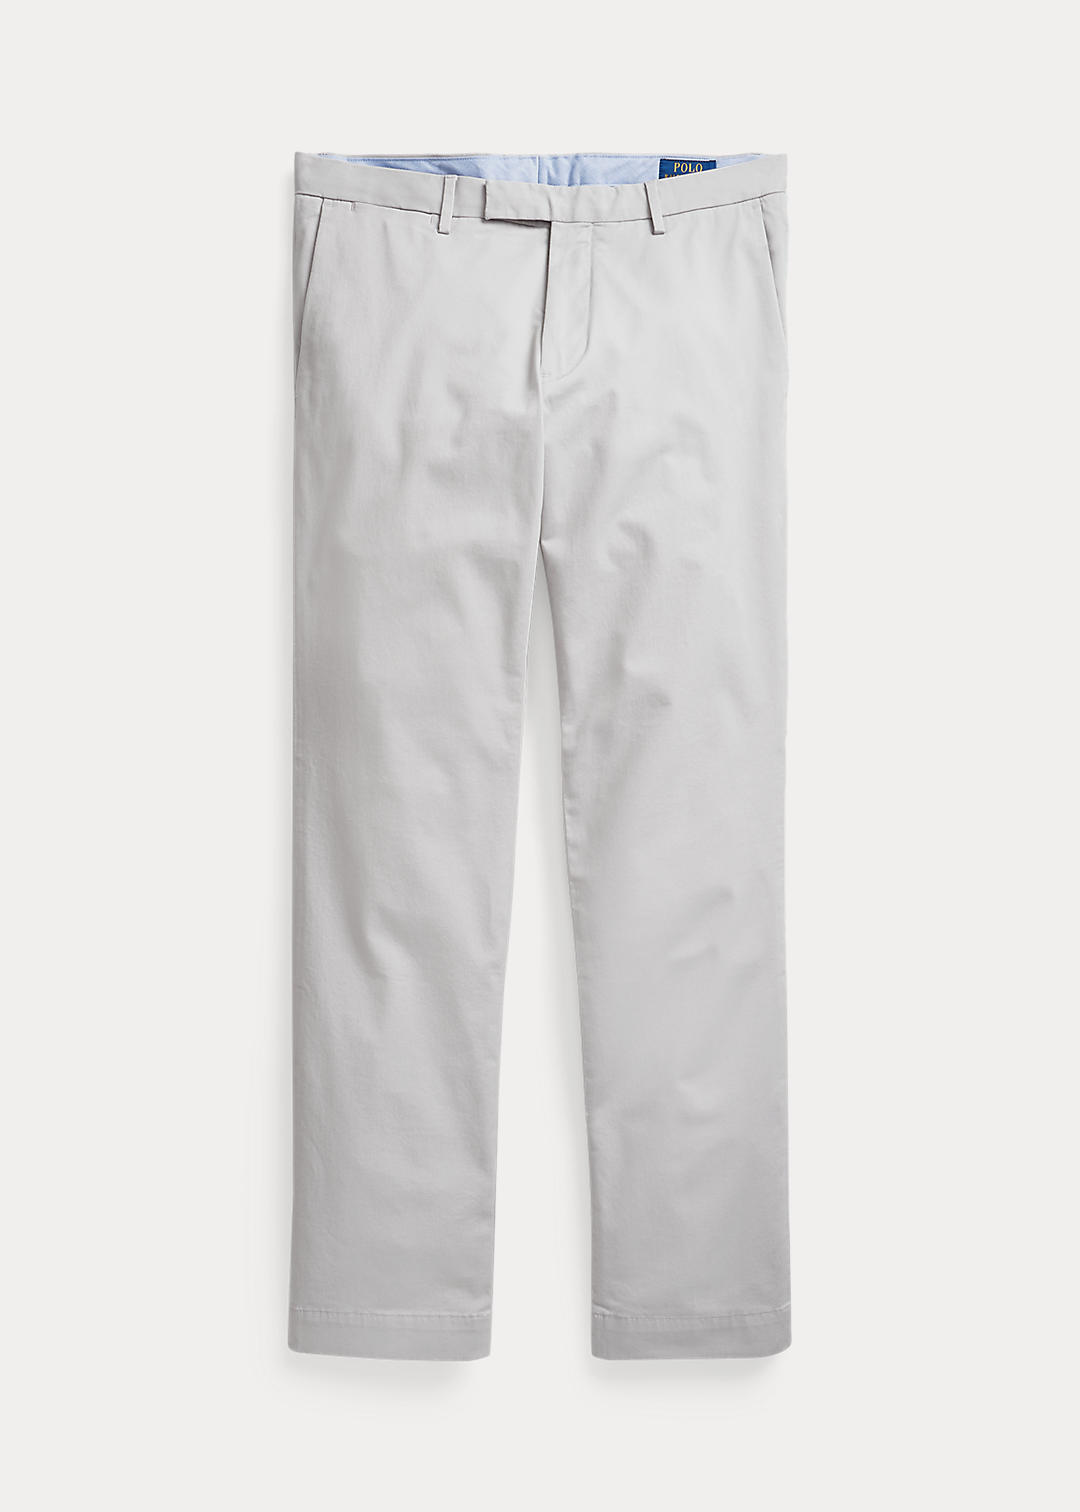 Polo Ralph Lauren Stretch Slim Fit Chino Trouser 2